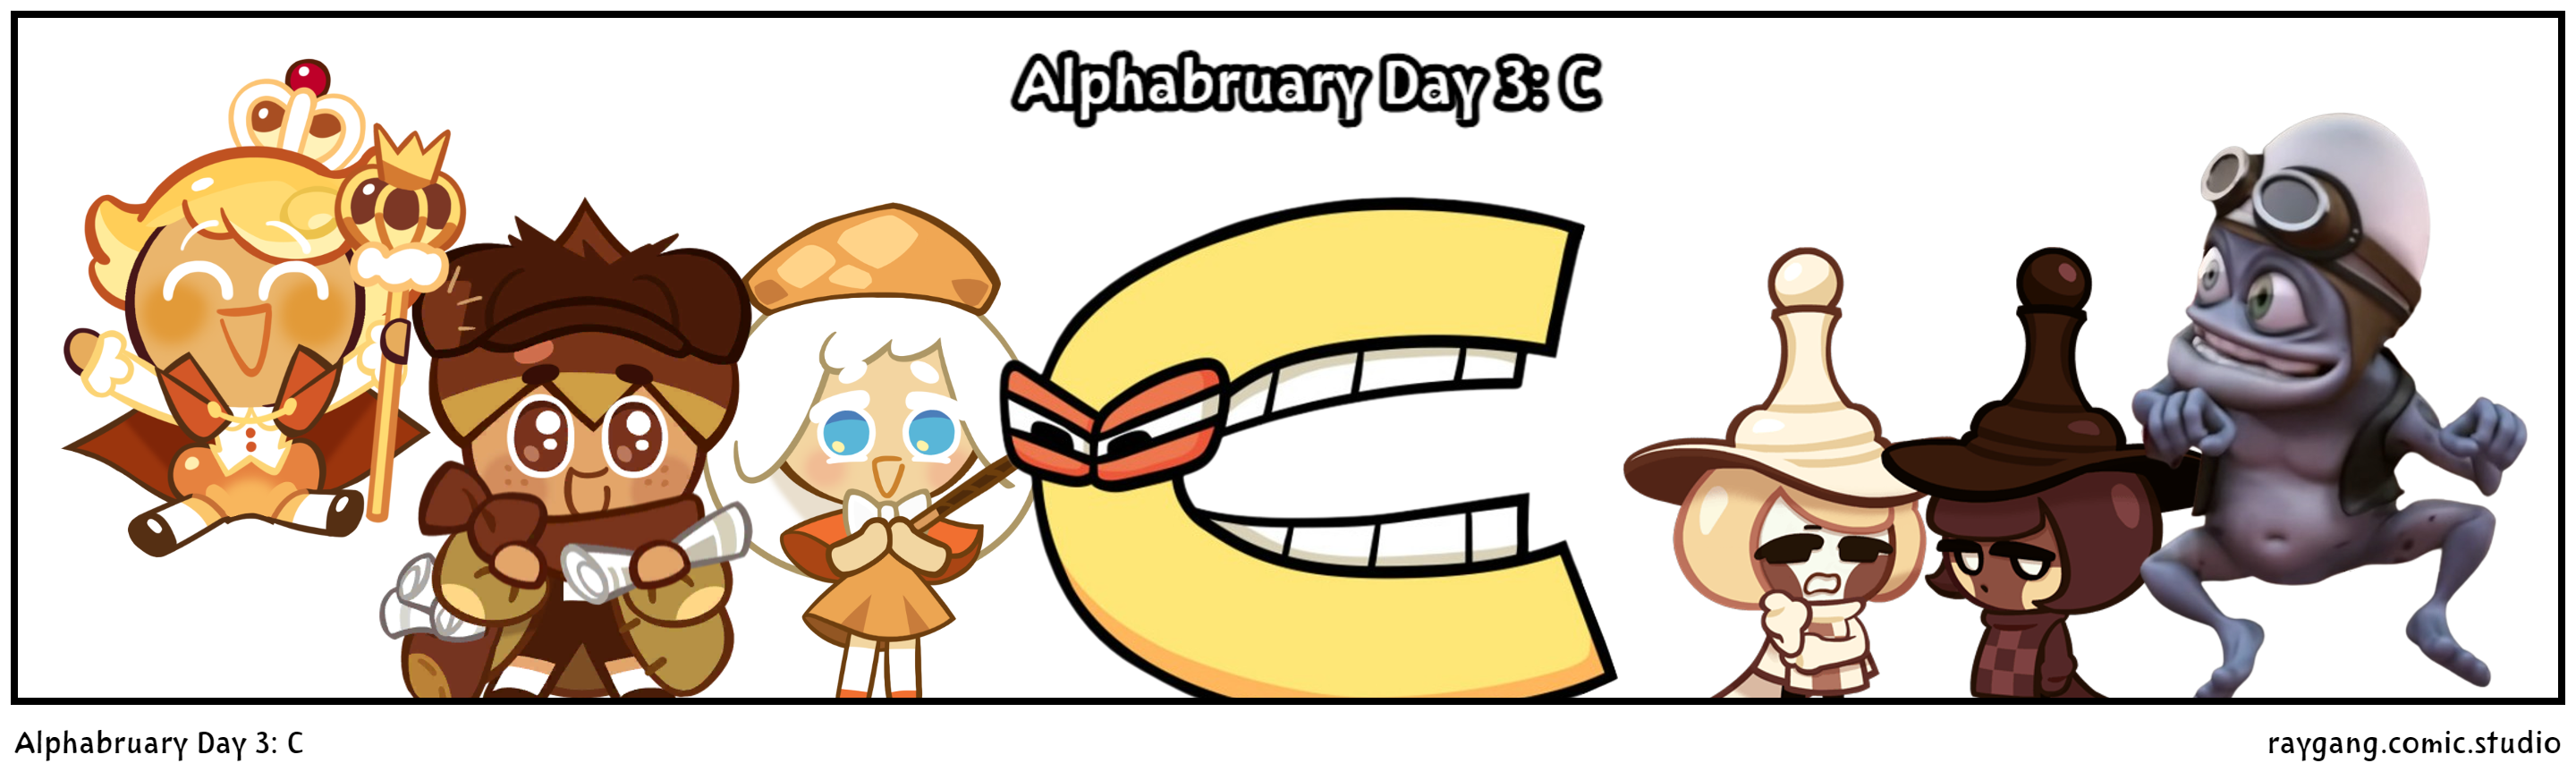 Alphabruary Day 3: C